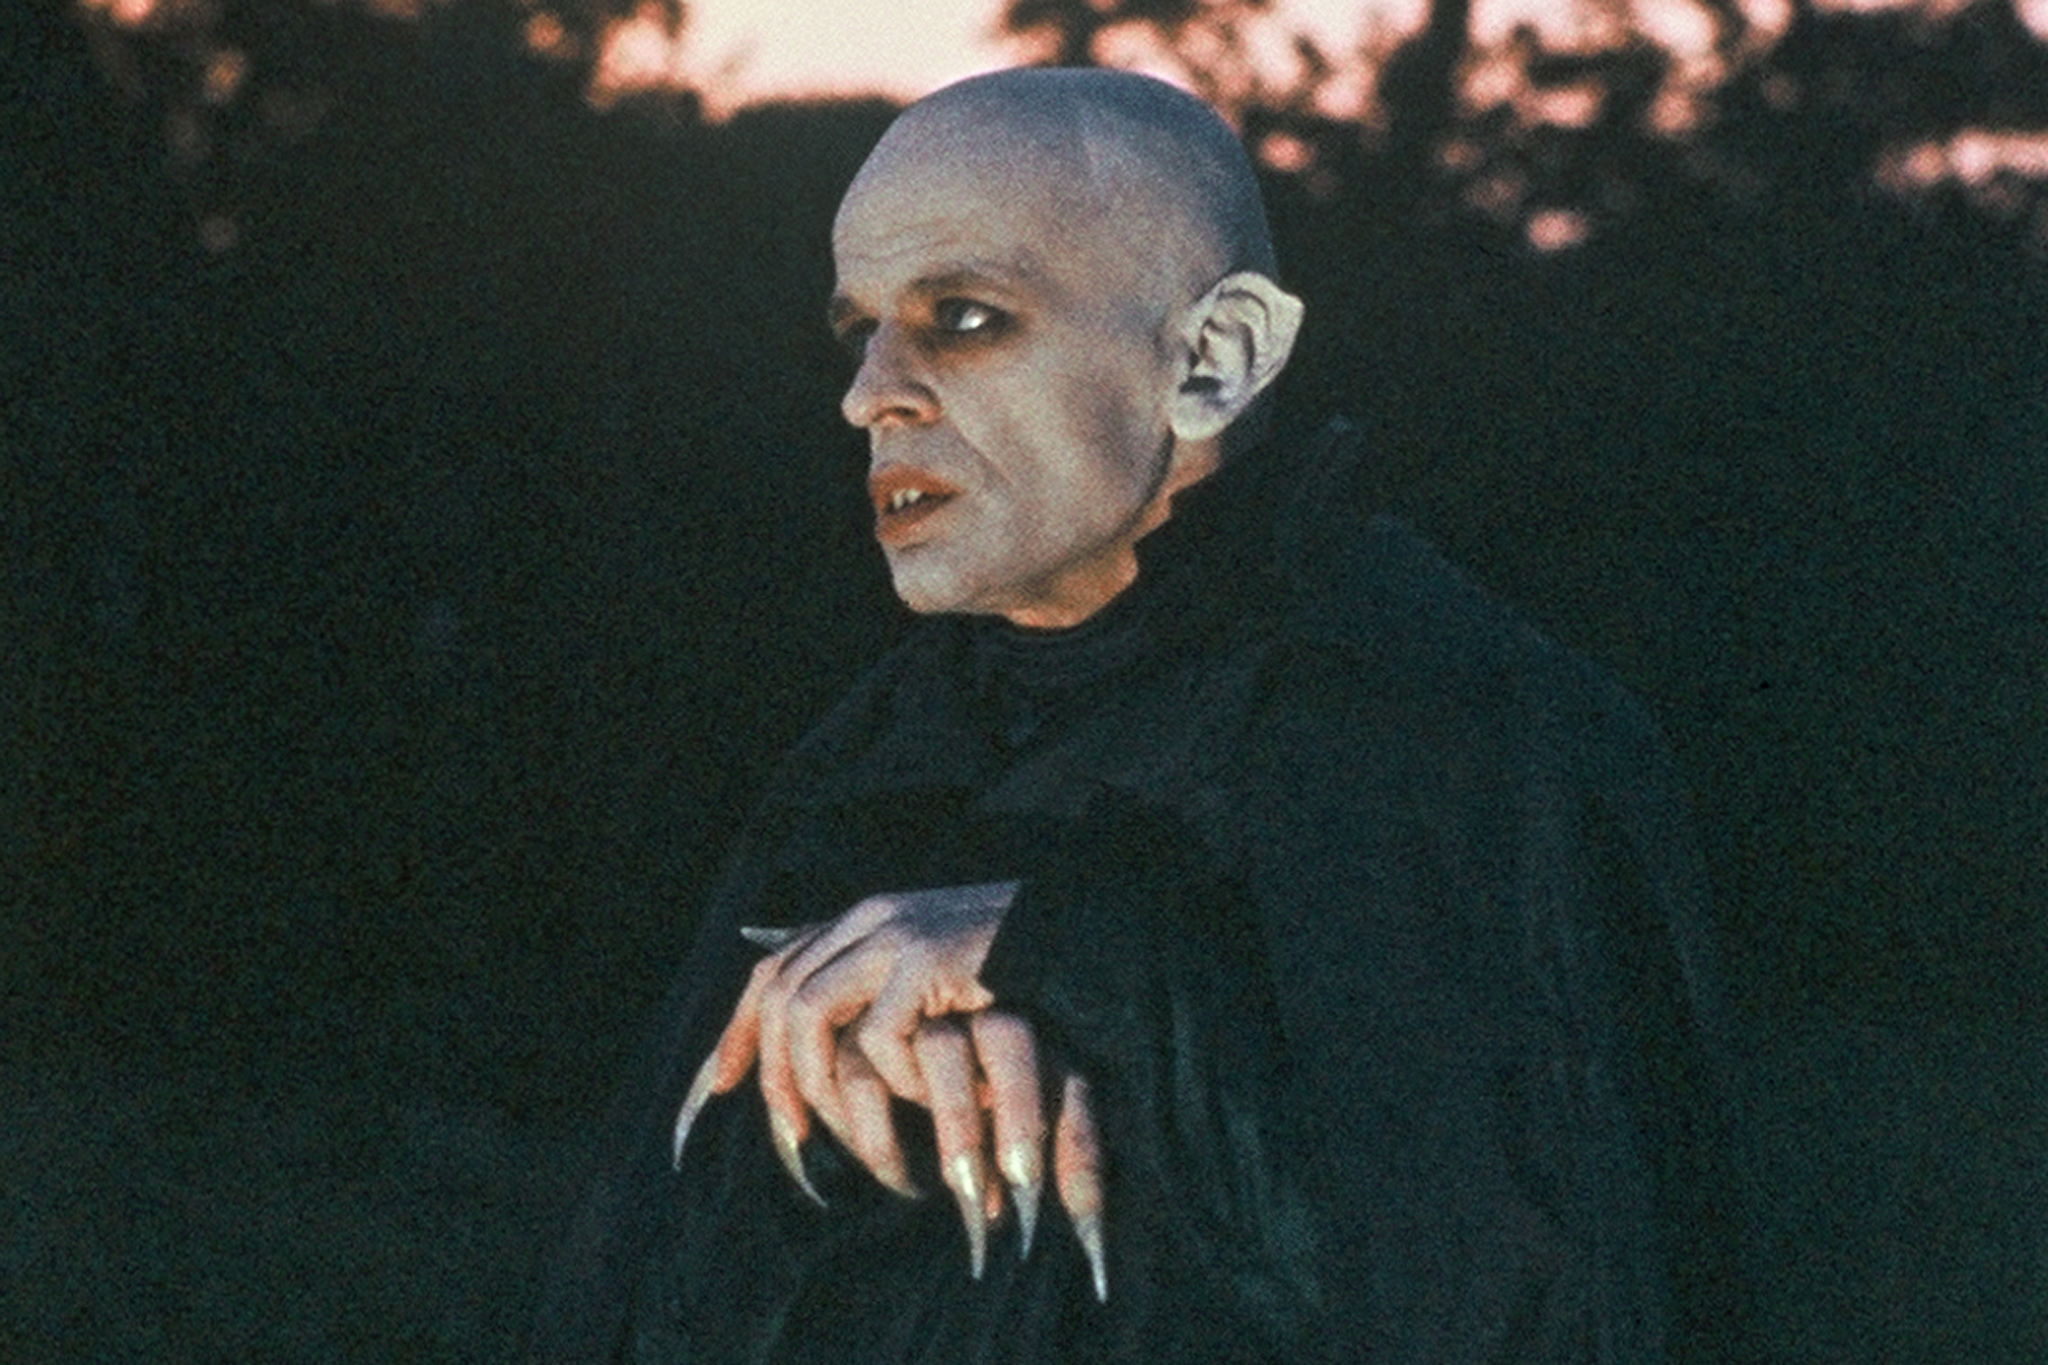 Nosferatu the Vampyre 1979, directed by Werner Herzog | Film review